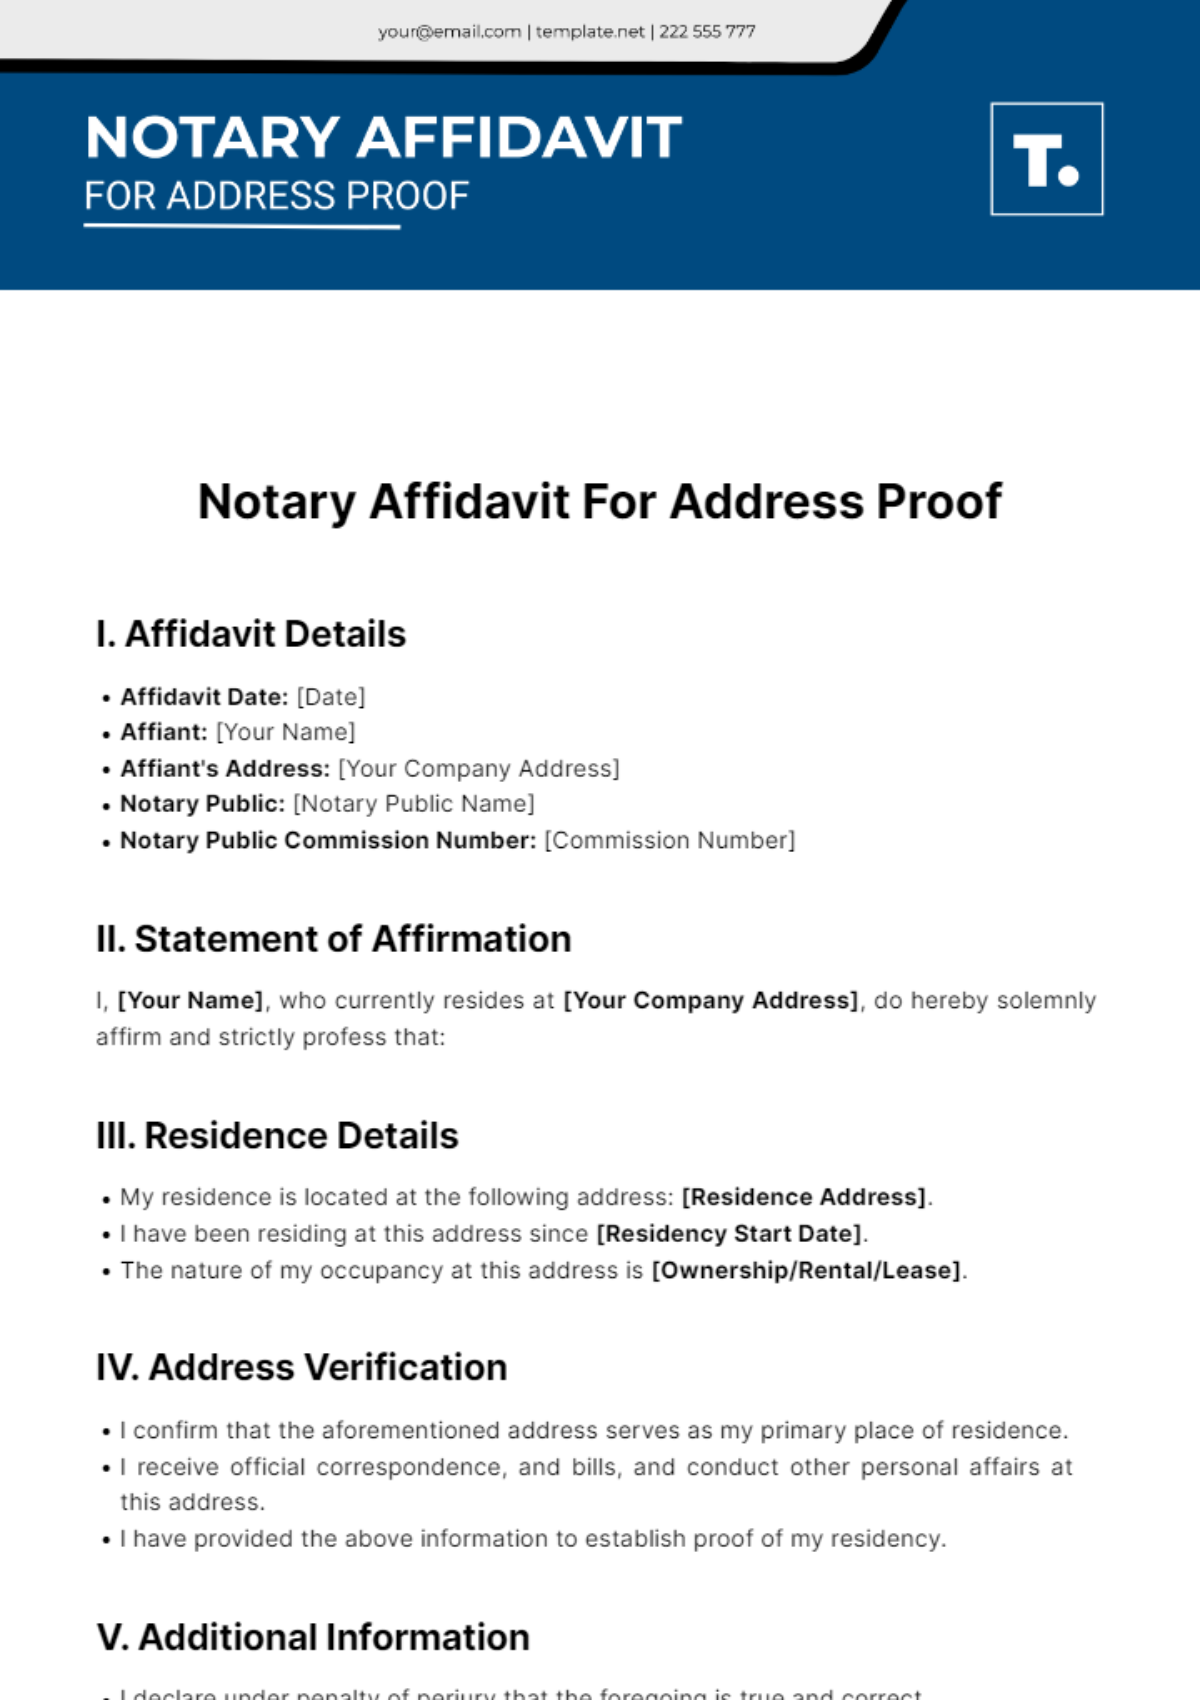 Notary Affidavit For Address Proof Template